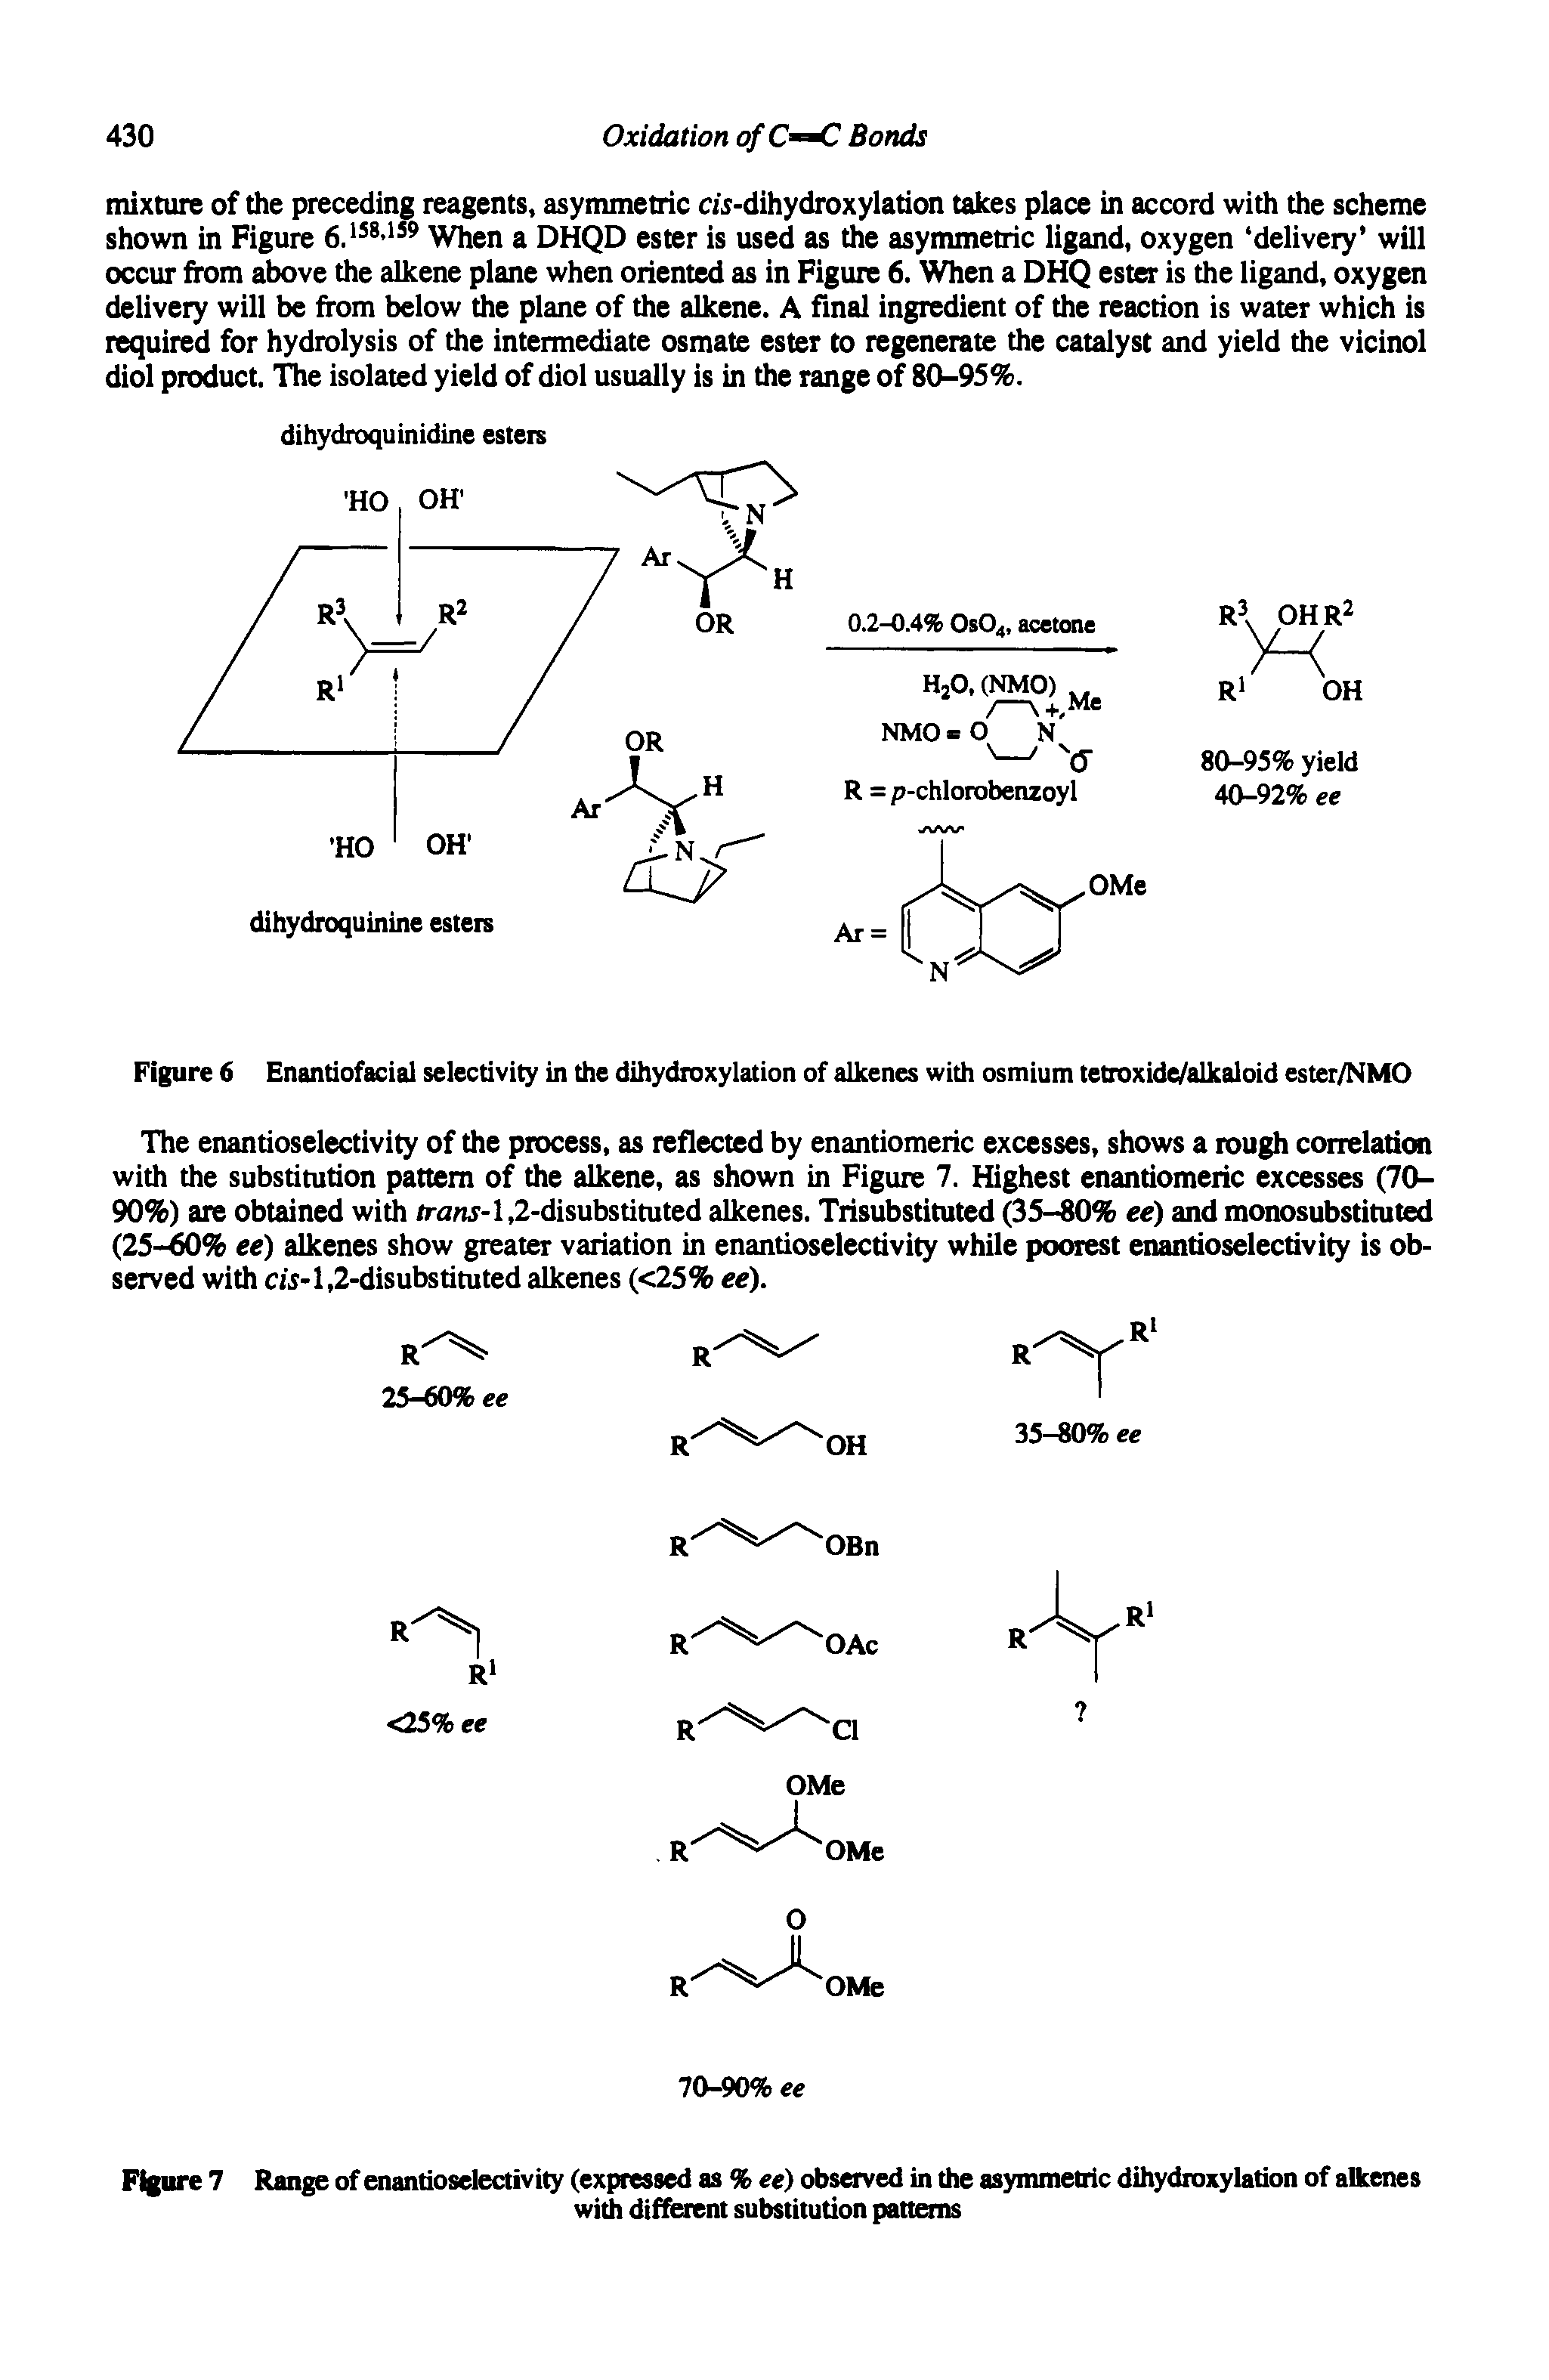 Figure 6 Enantiofacial selectivity in the dihydroxylation of alkenes with osmium tetroxide/alkaloid ester/NMO...